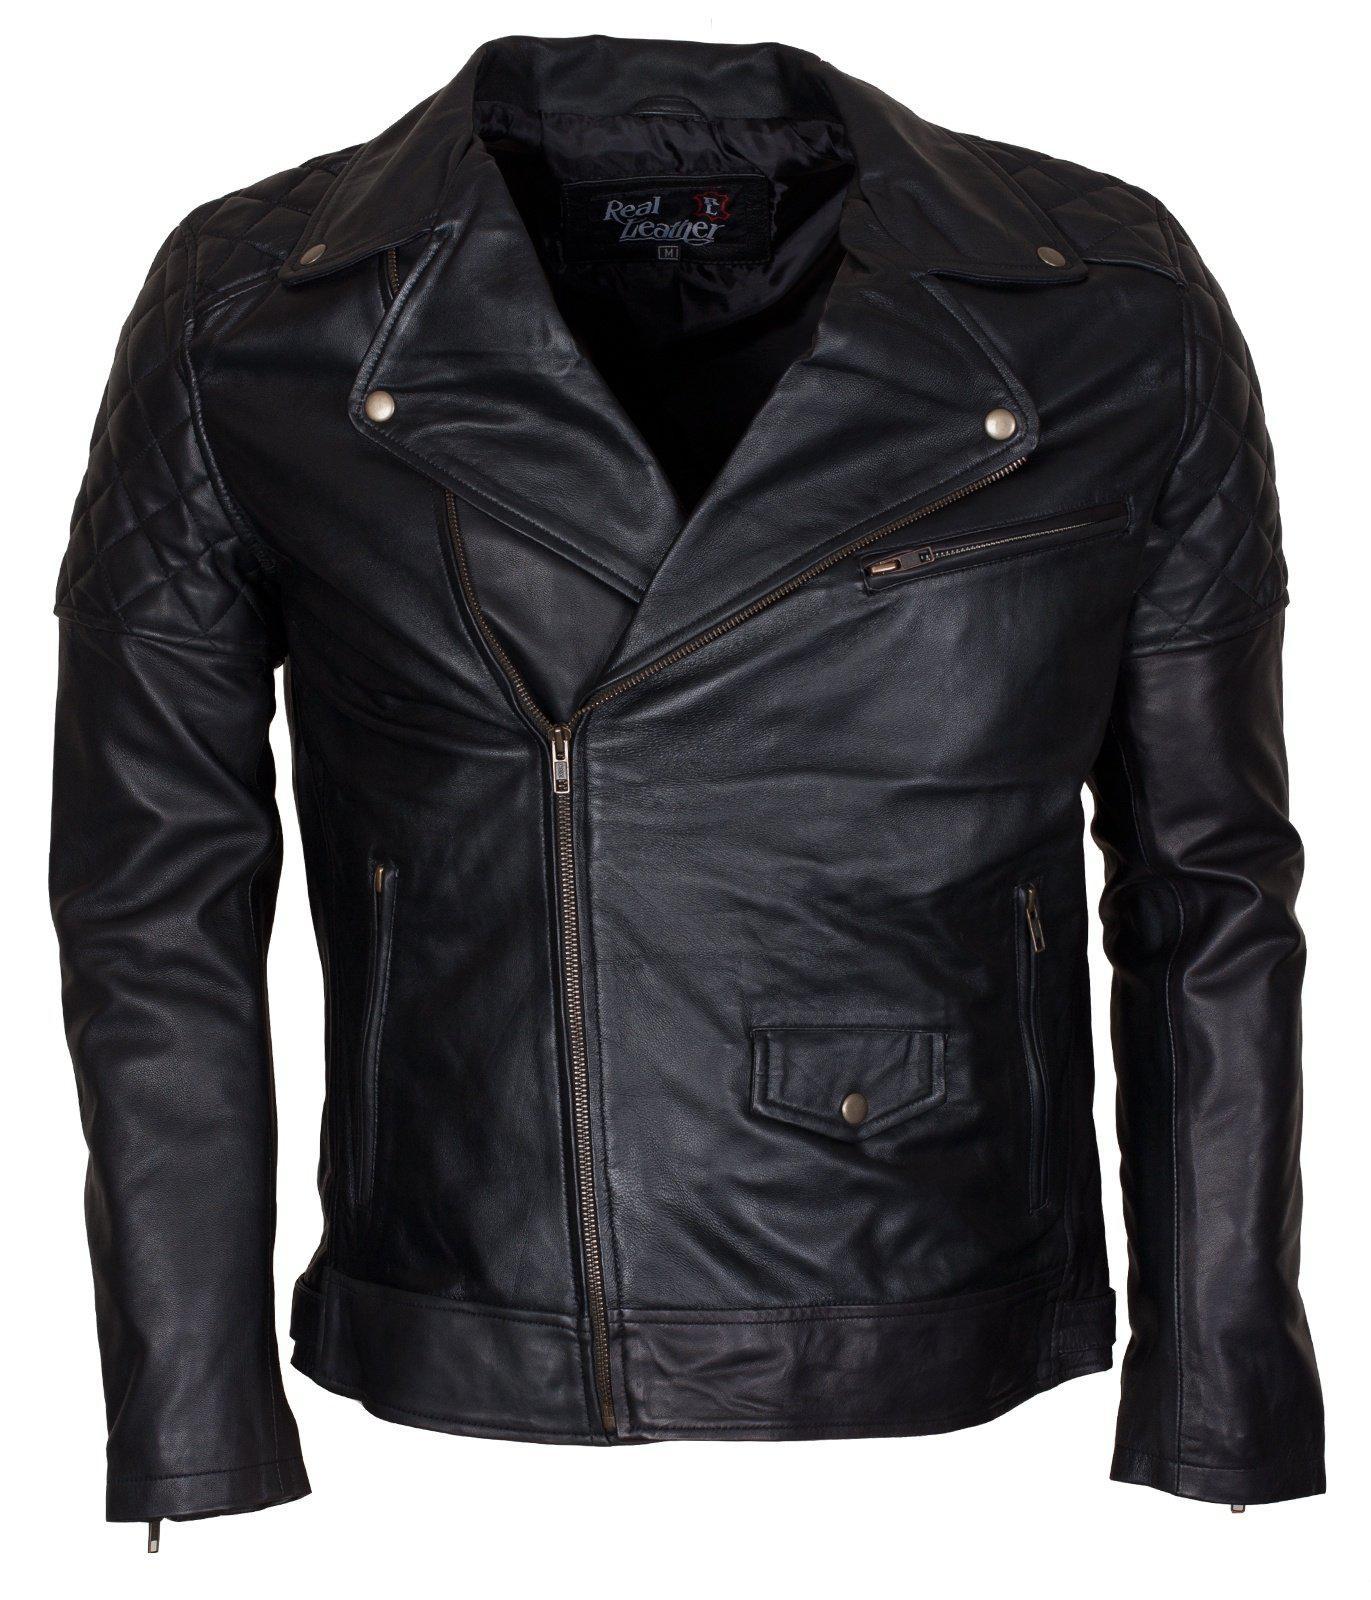 Alex Gear | Men's Waxed Brando Genuine Leather Motorcycle Jacket